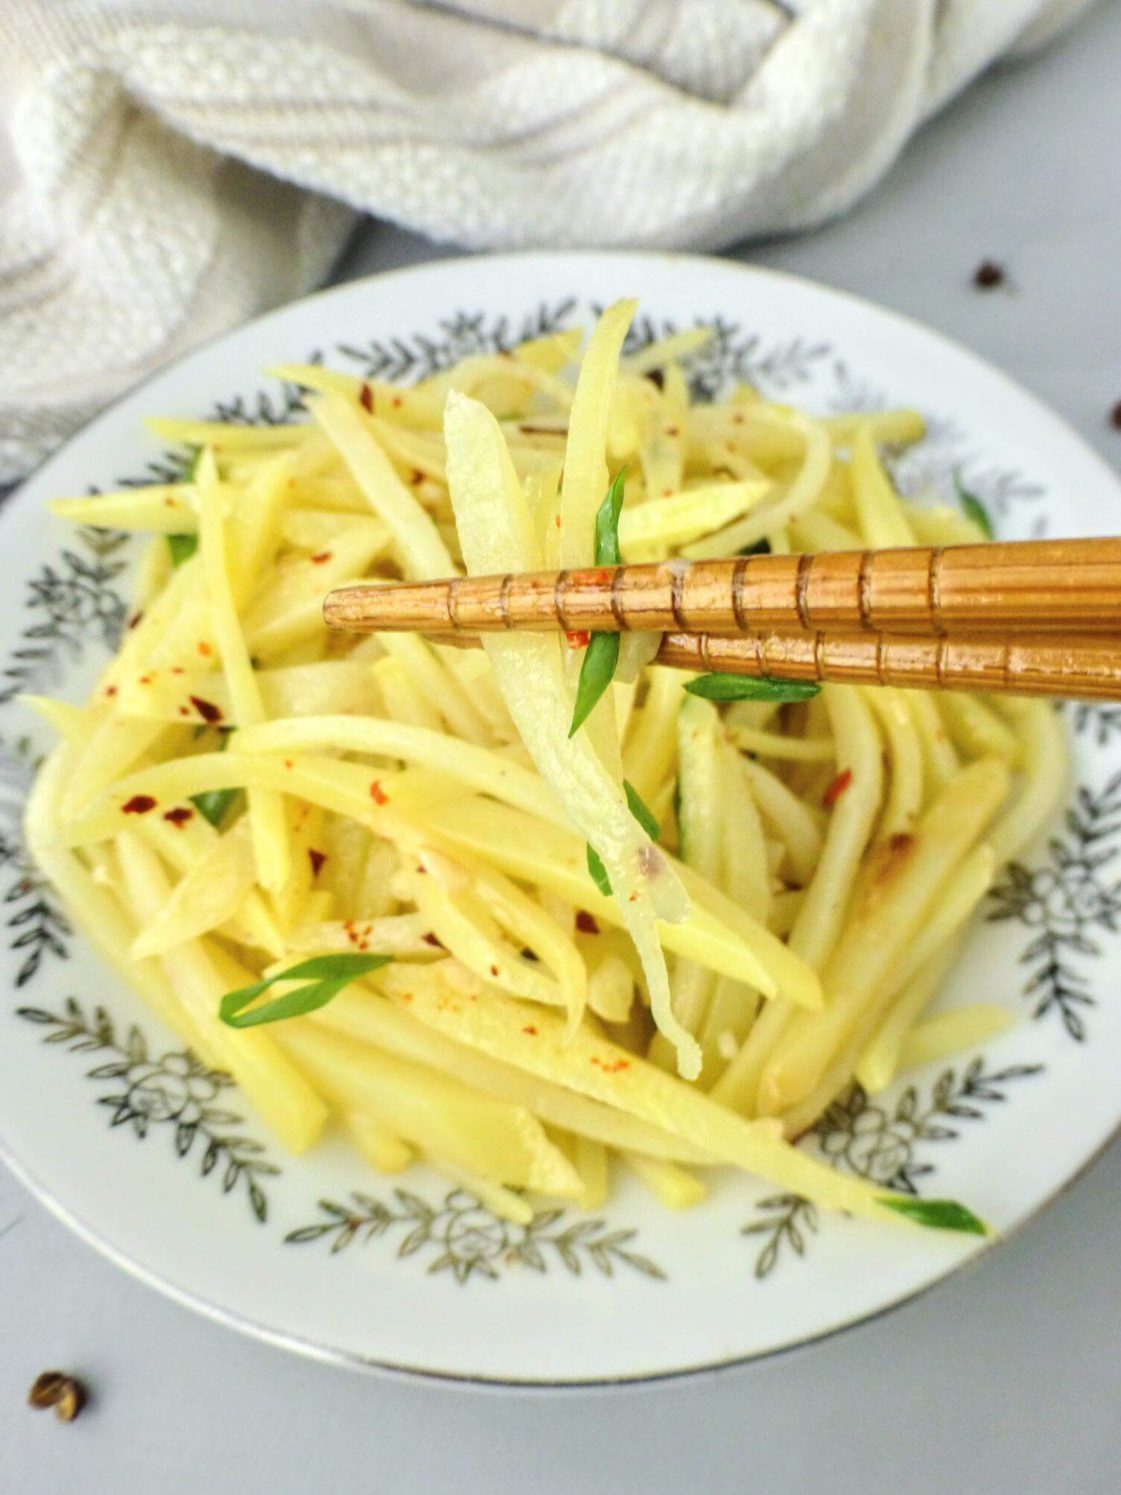 Sichuan Potato Stir-fry (Suan La Tu Dou Si) with chopsticks